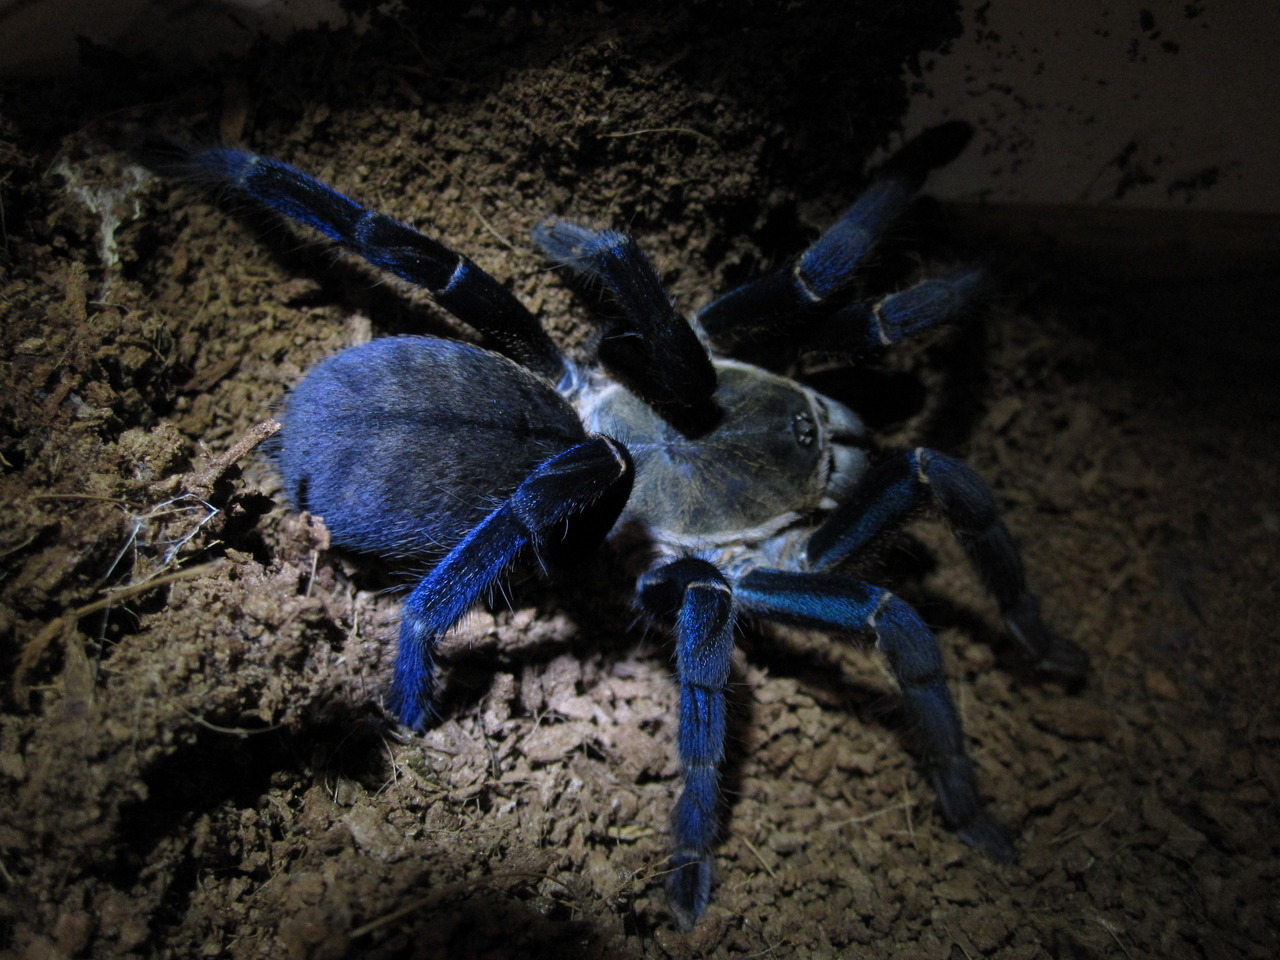 lovingexotics:
“ Cobalt Blue Tarantula
Haplopelma lividum
source:  Here
”